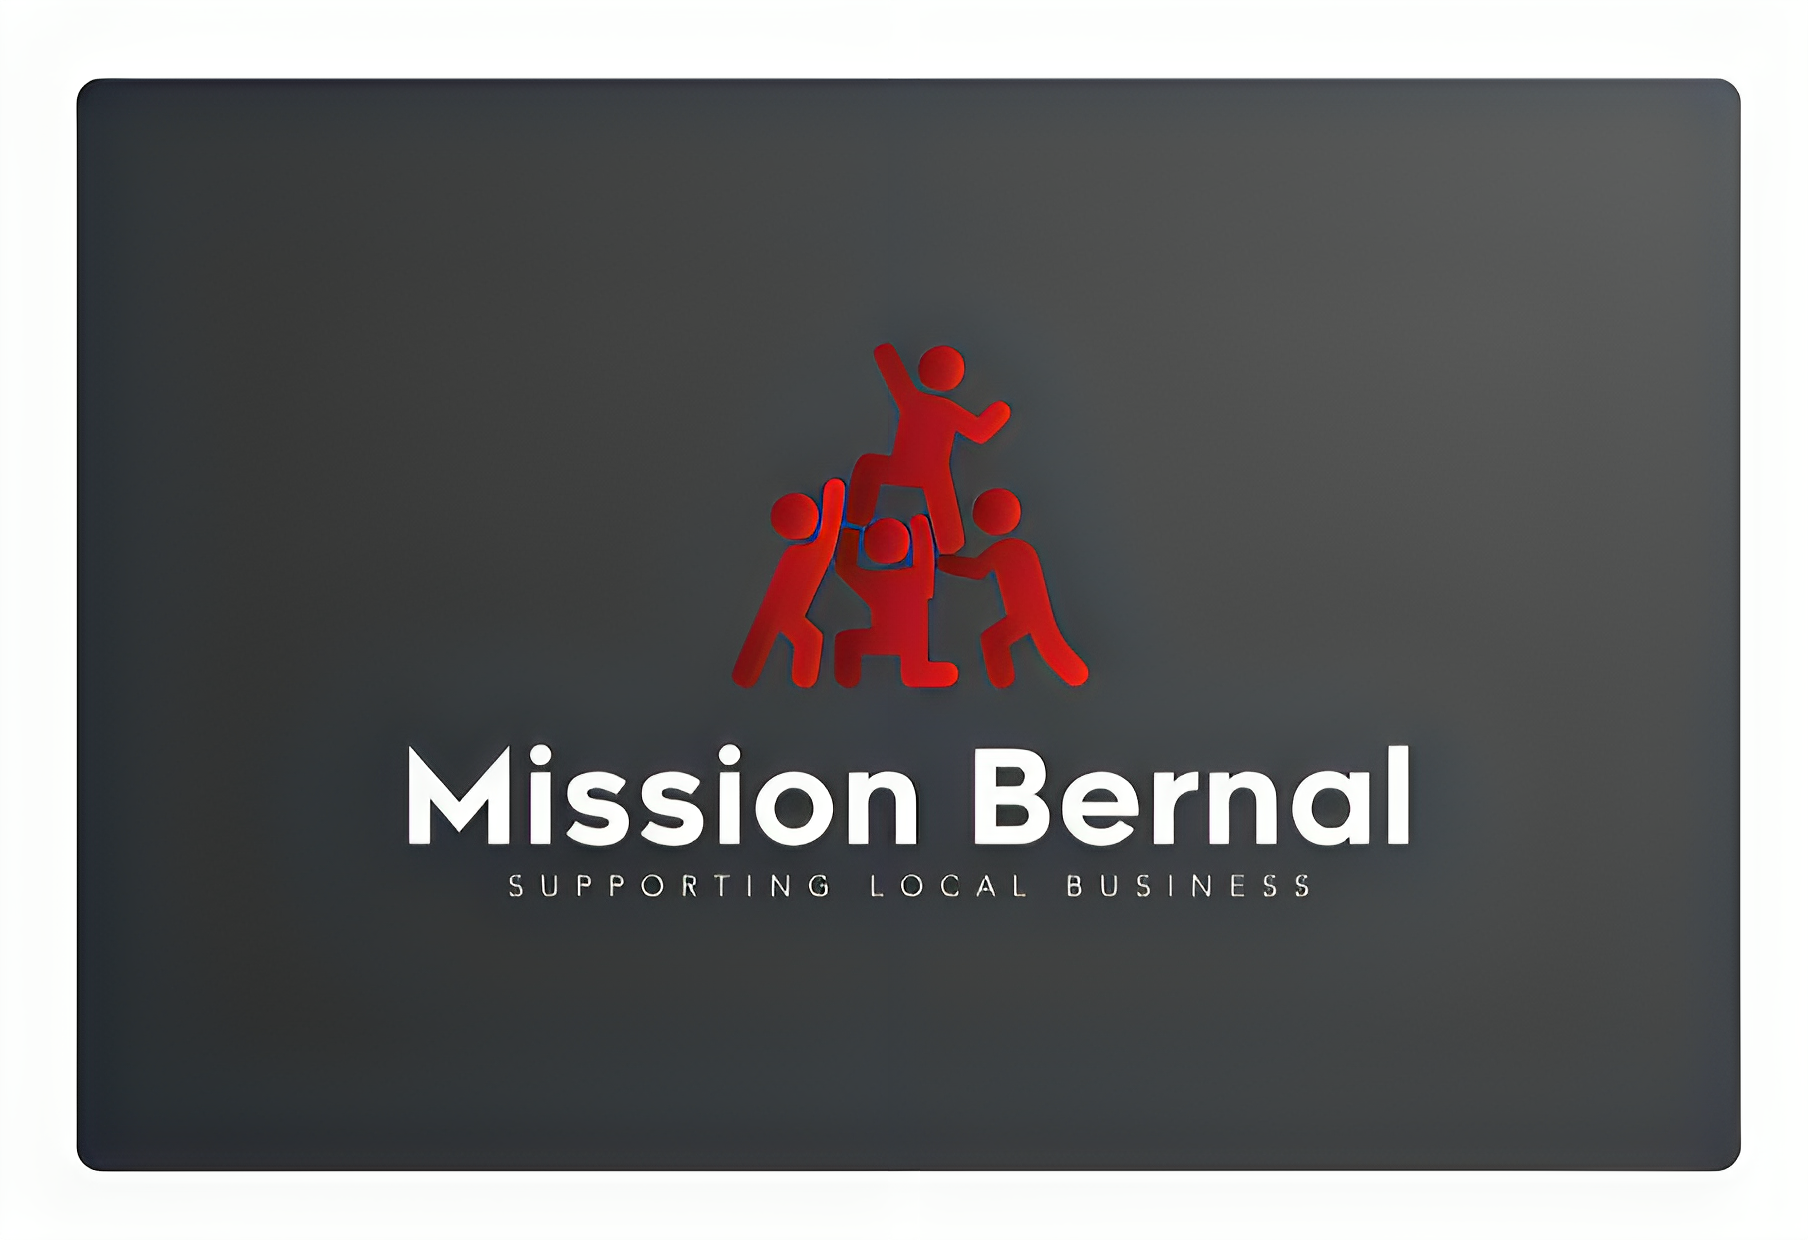 Mission Bernal